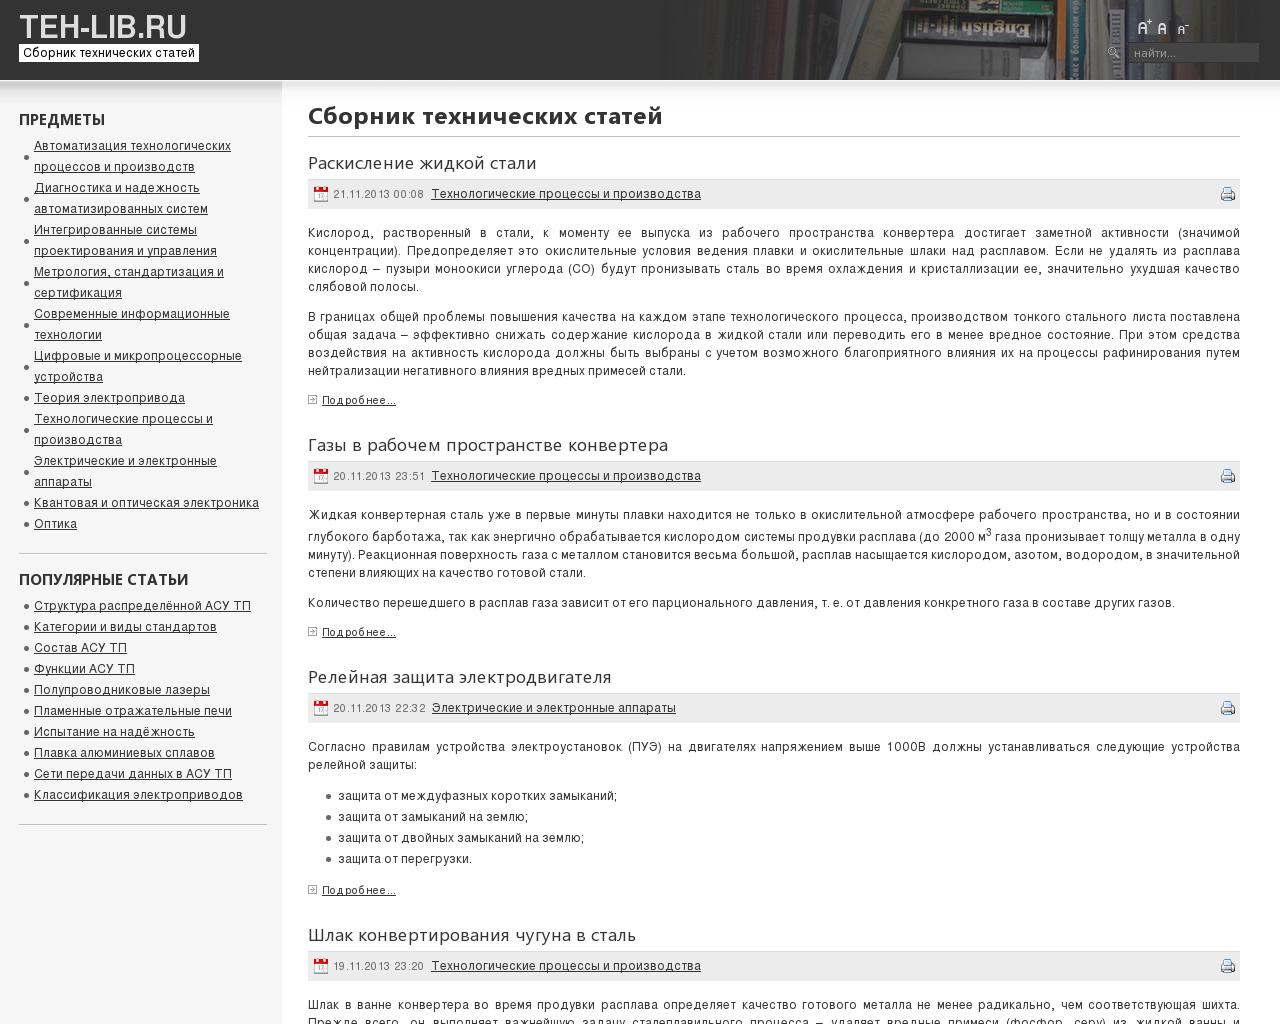 Изображение сайта teh-lib.ru в разрешении 1280x1024